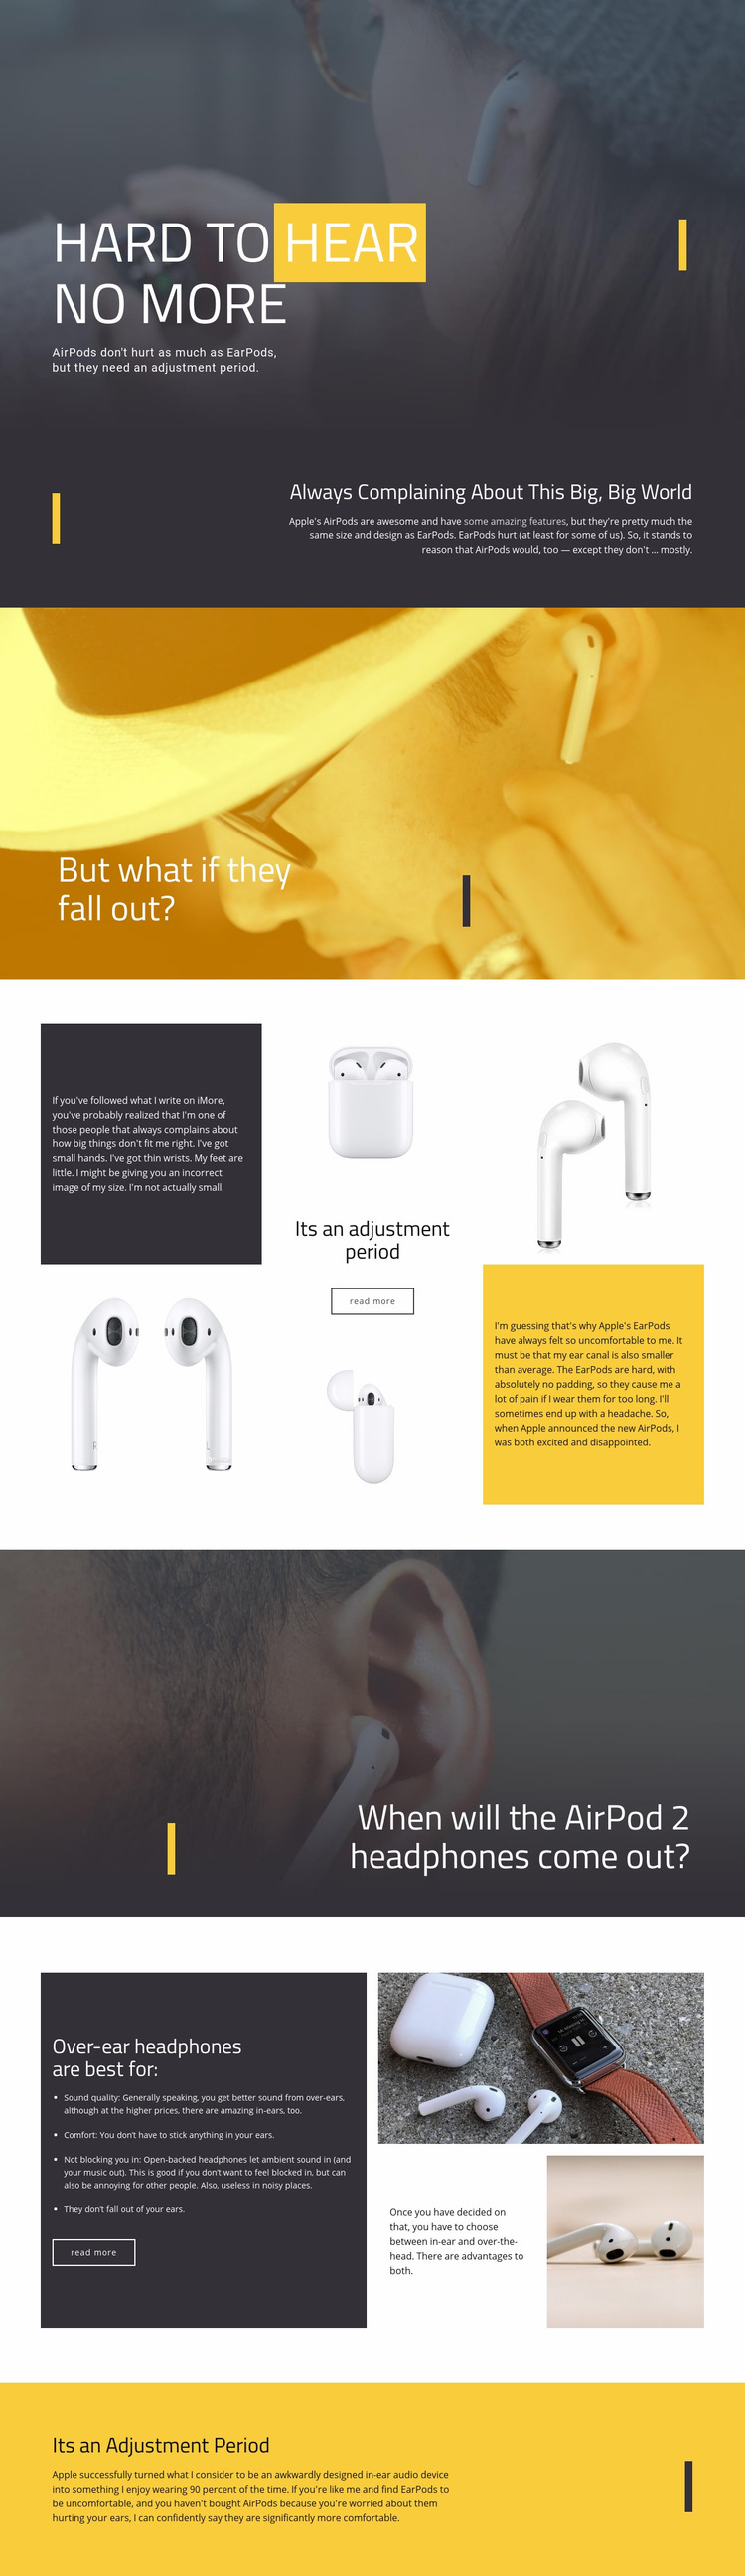 Best Headphones Web Page Design